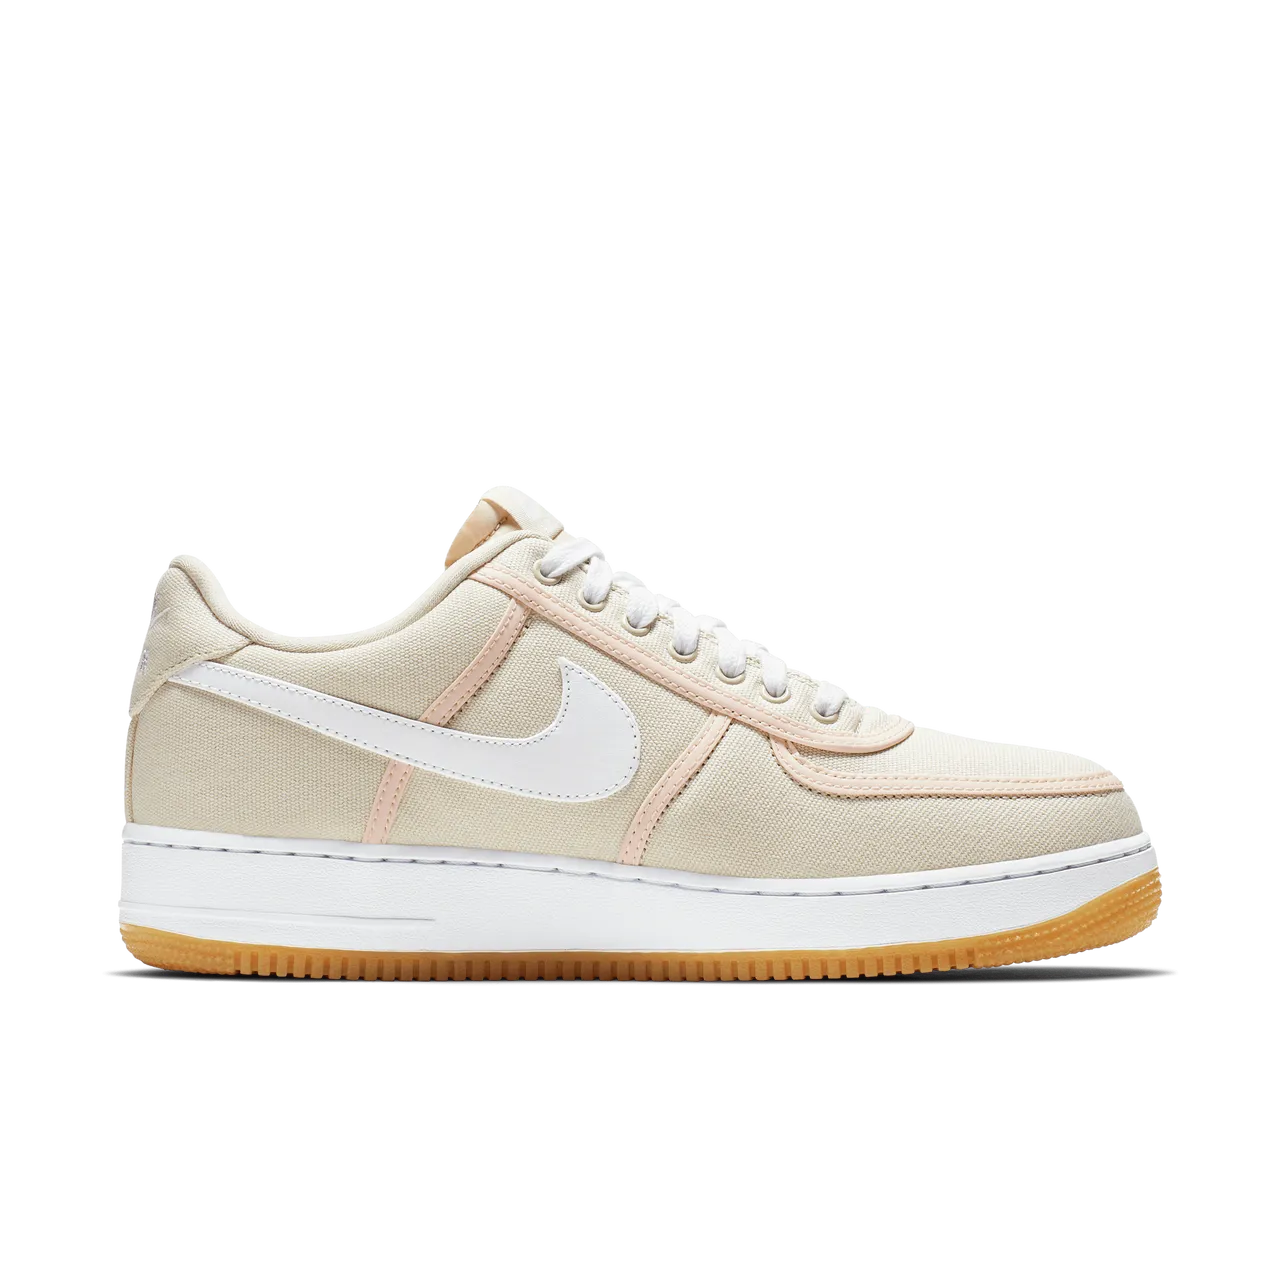 Nike Air Force 1 '07 Premium Men's Shoe - White